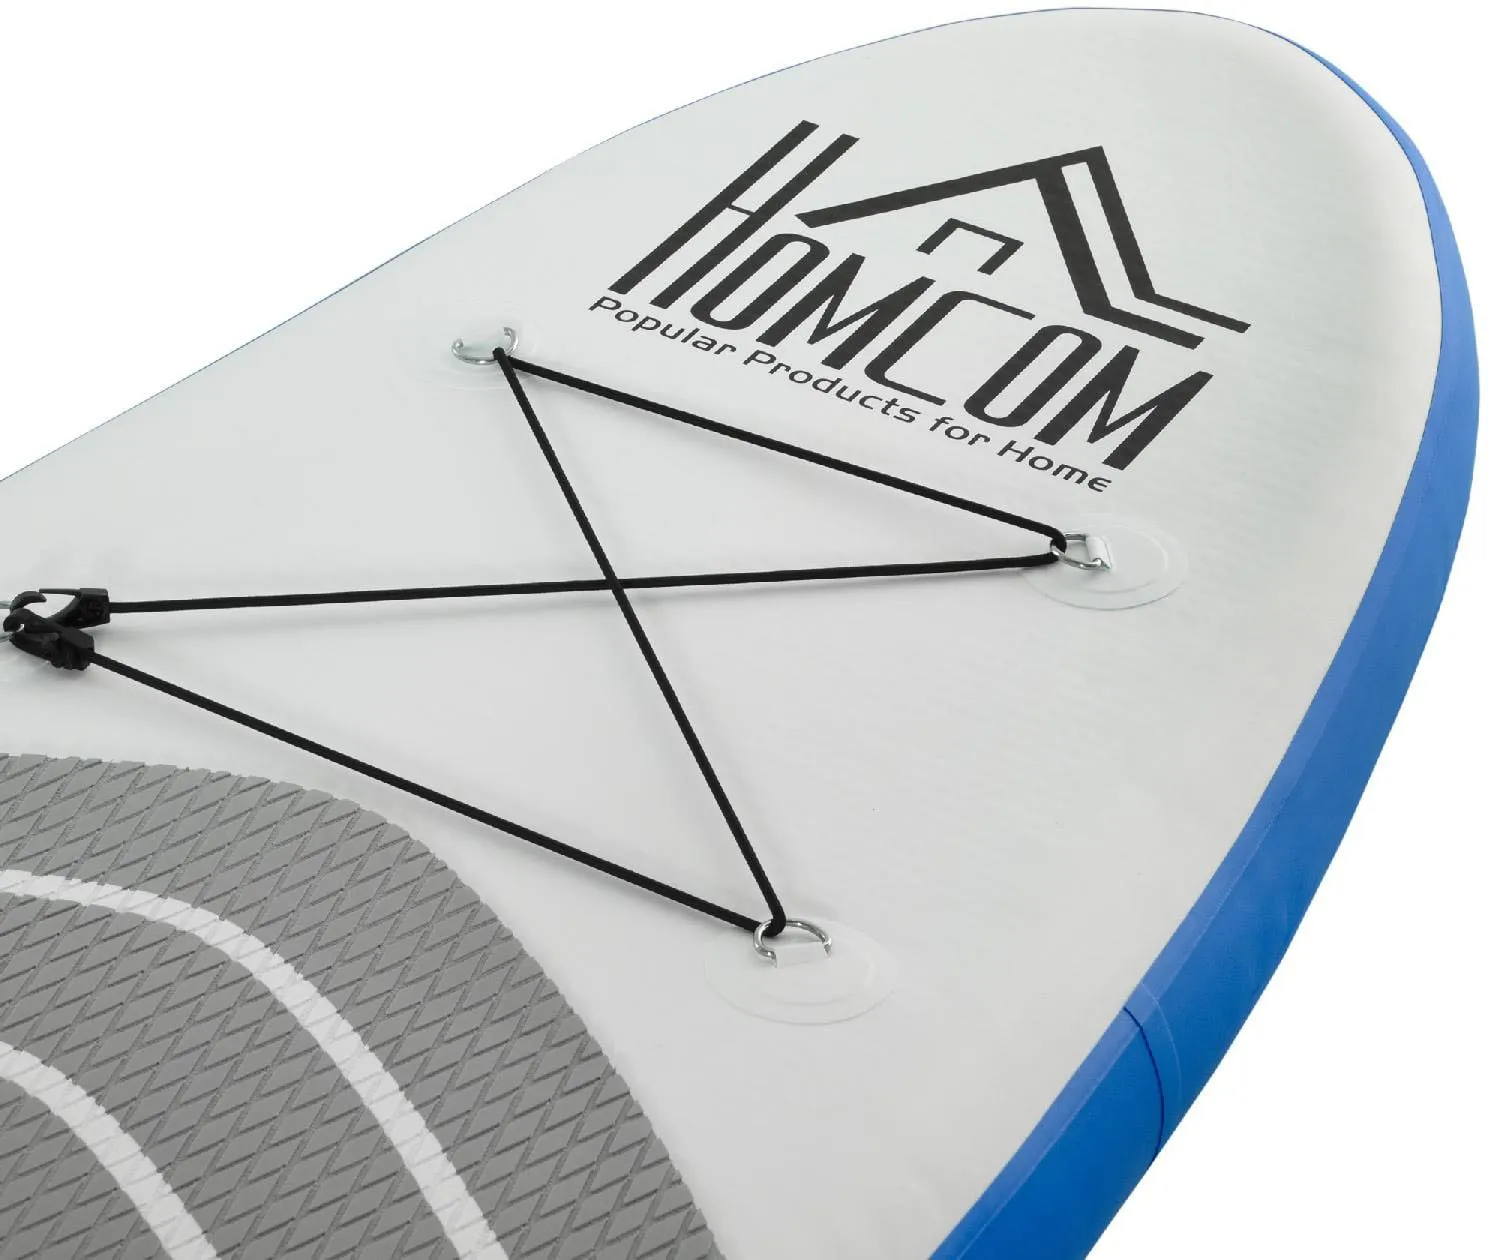 DecHome Tavola SUP Gonfiabile con Accessori Inclusi Stand Up Paddle per  Adulti e Teenager 305x80x15 cm colore Blu/Bianco - 14A33